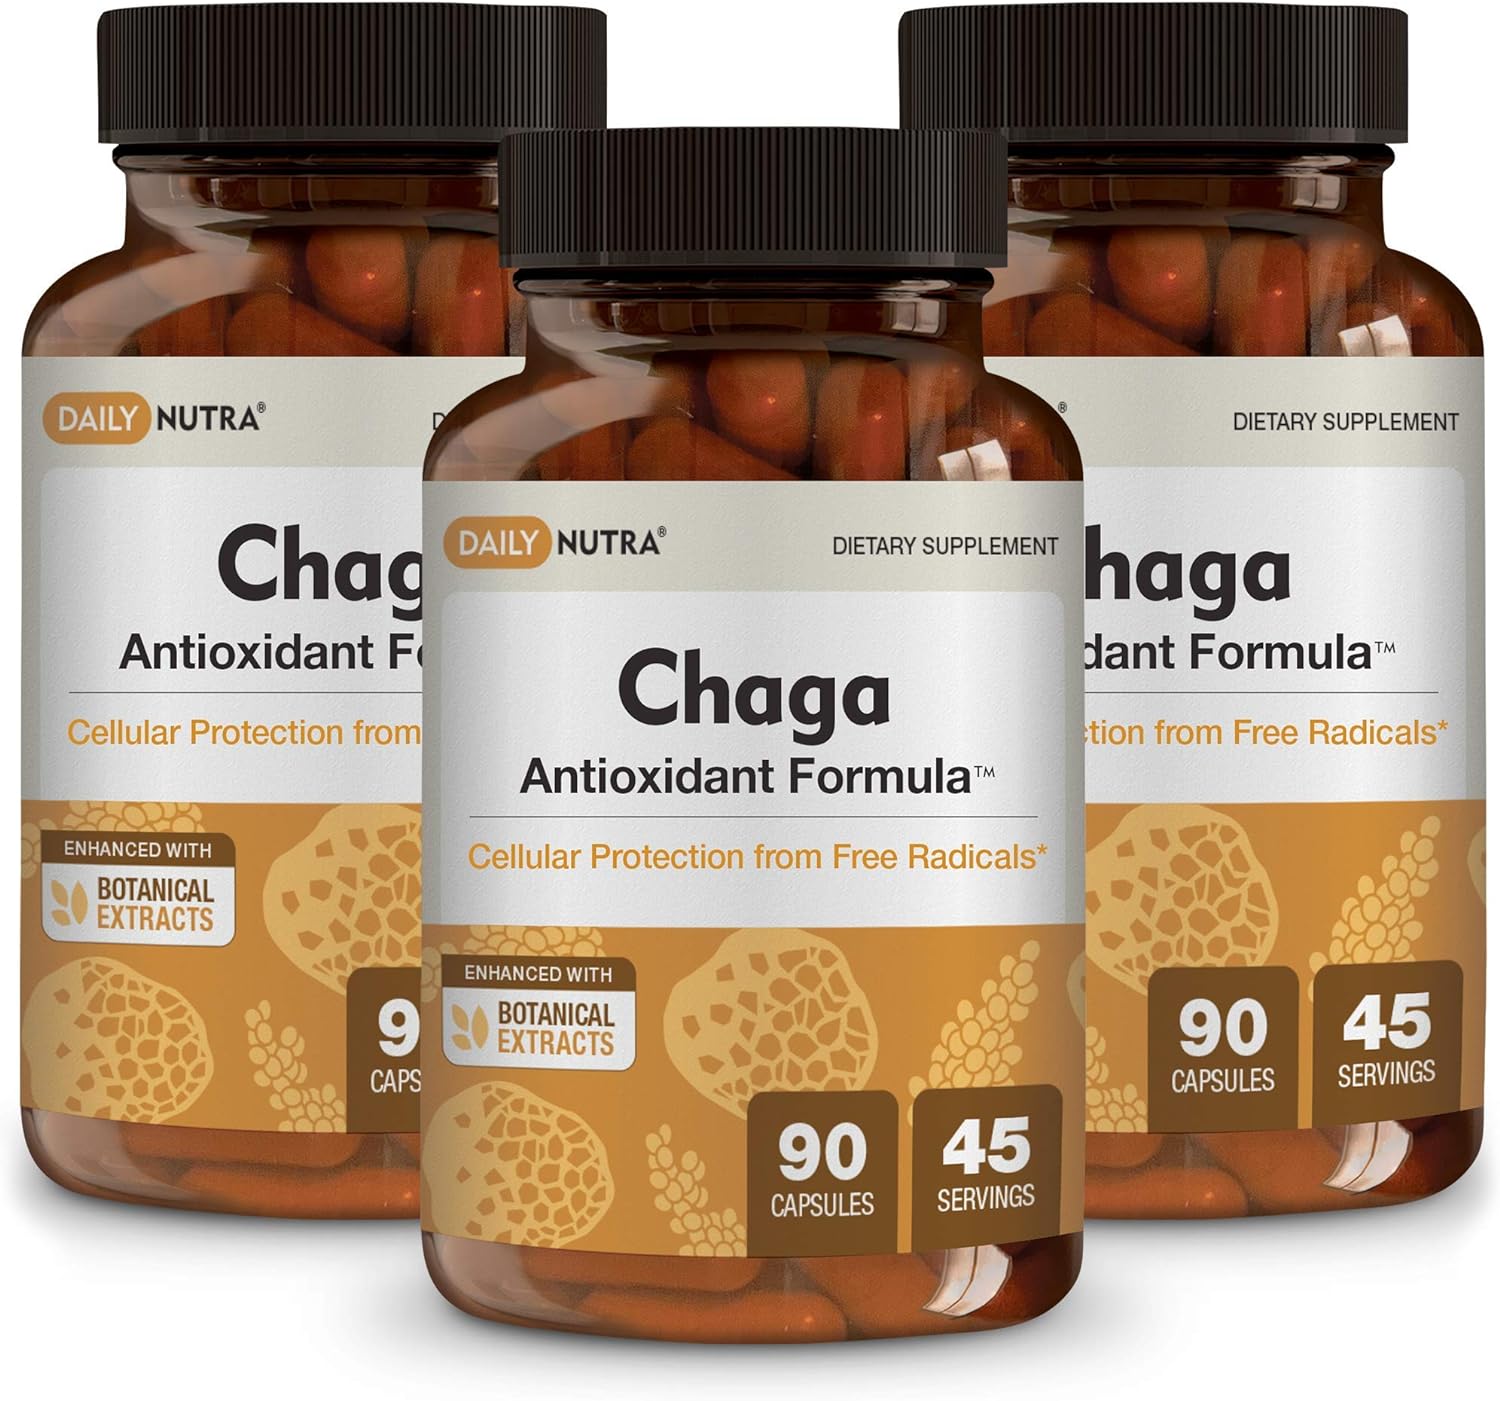 DailyNutra Chaga Antioxidant Formula Superfood Supplement - Protection